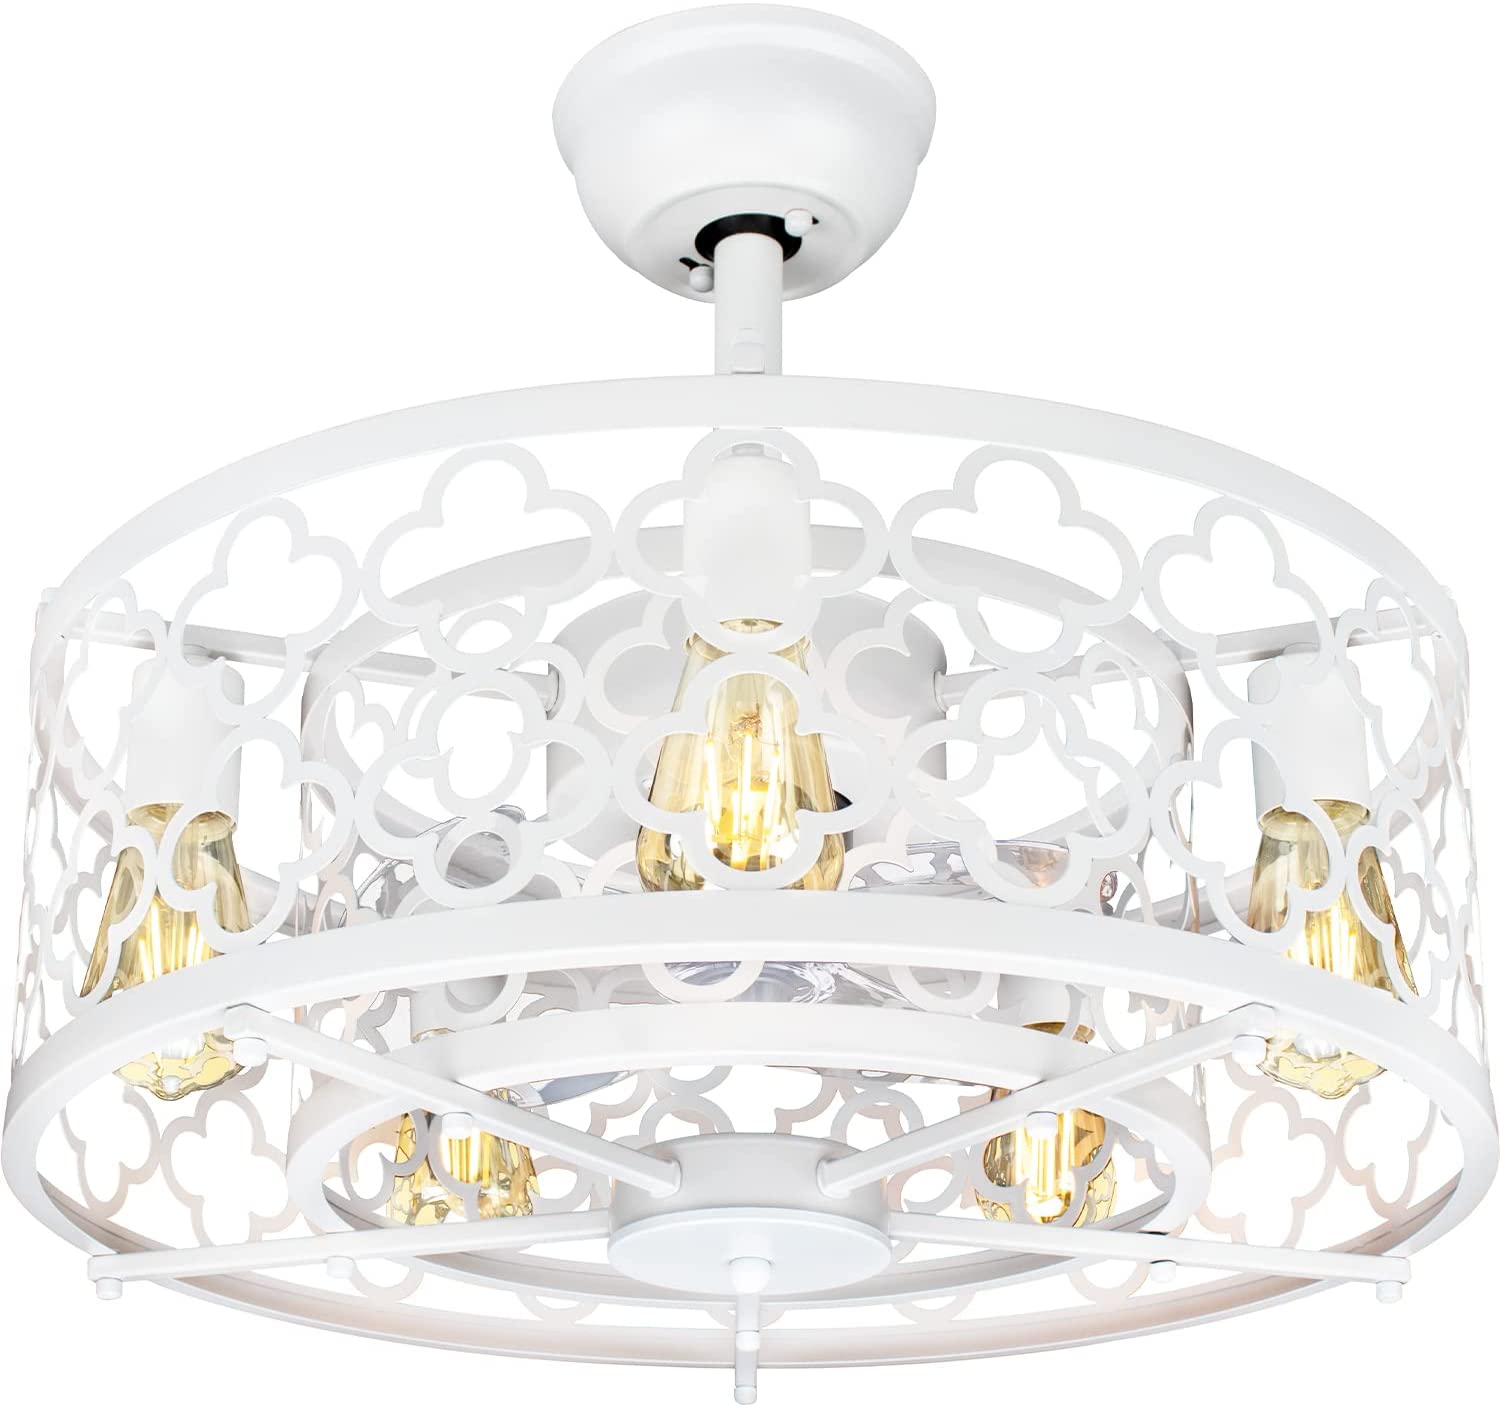 vaskepulver årsag erektion SUNVIE Caged Ceiling Fan with Light 21in White Ceiling Fans with Light